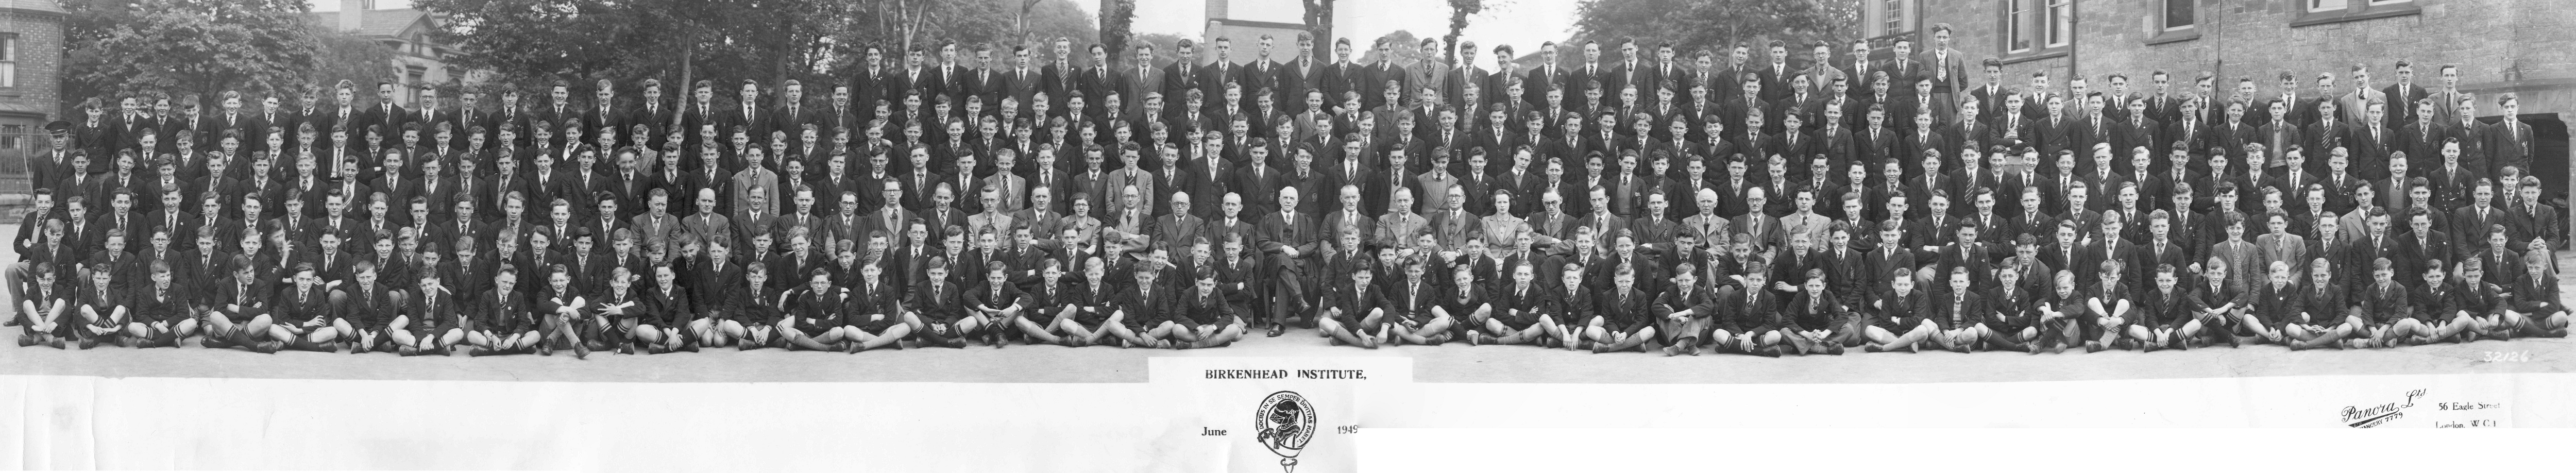 Whole School Photograph 1949